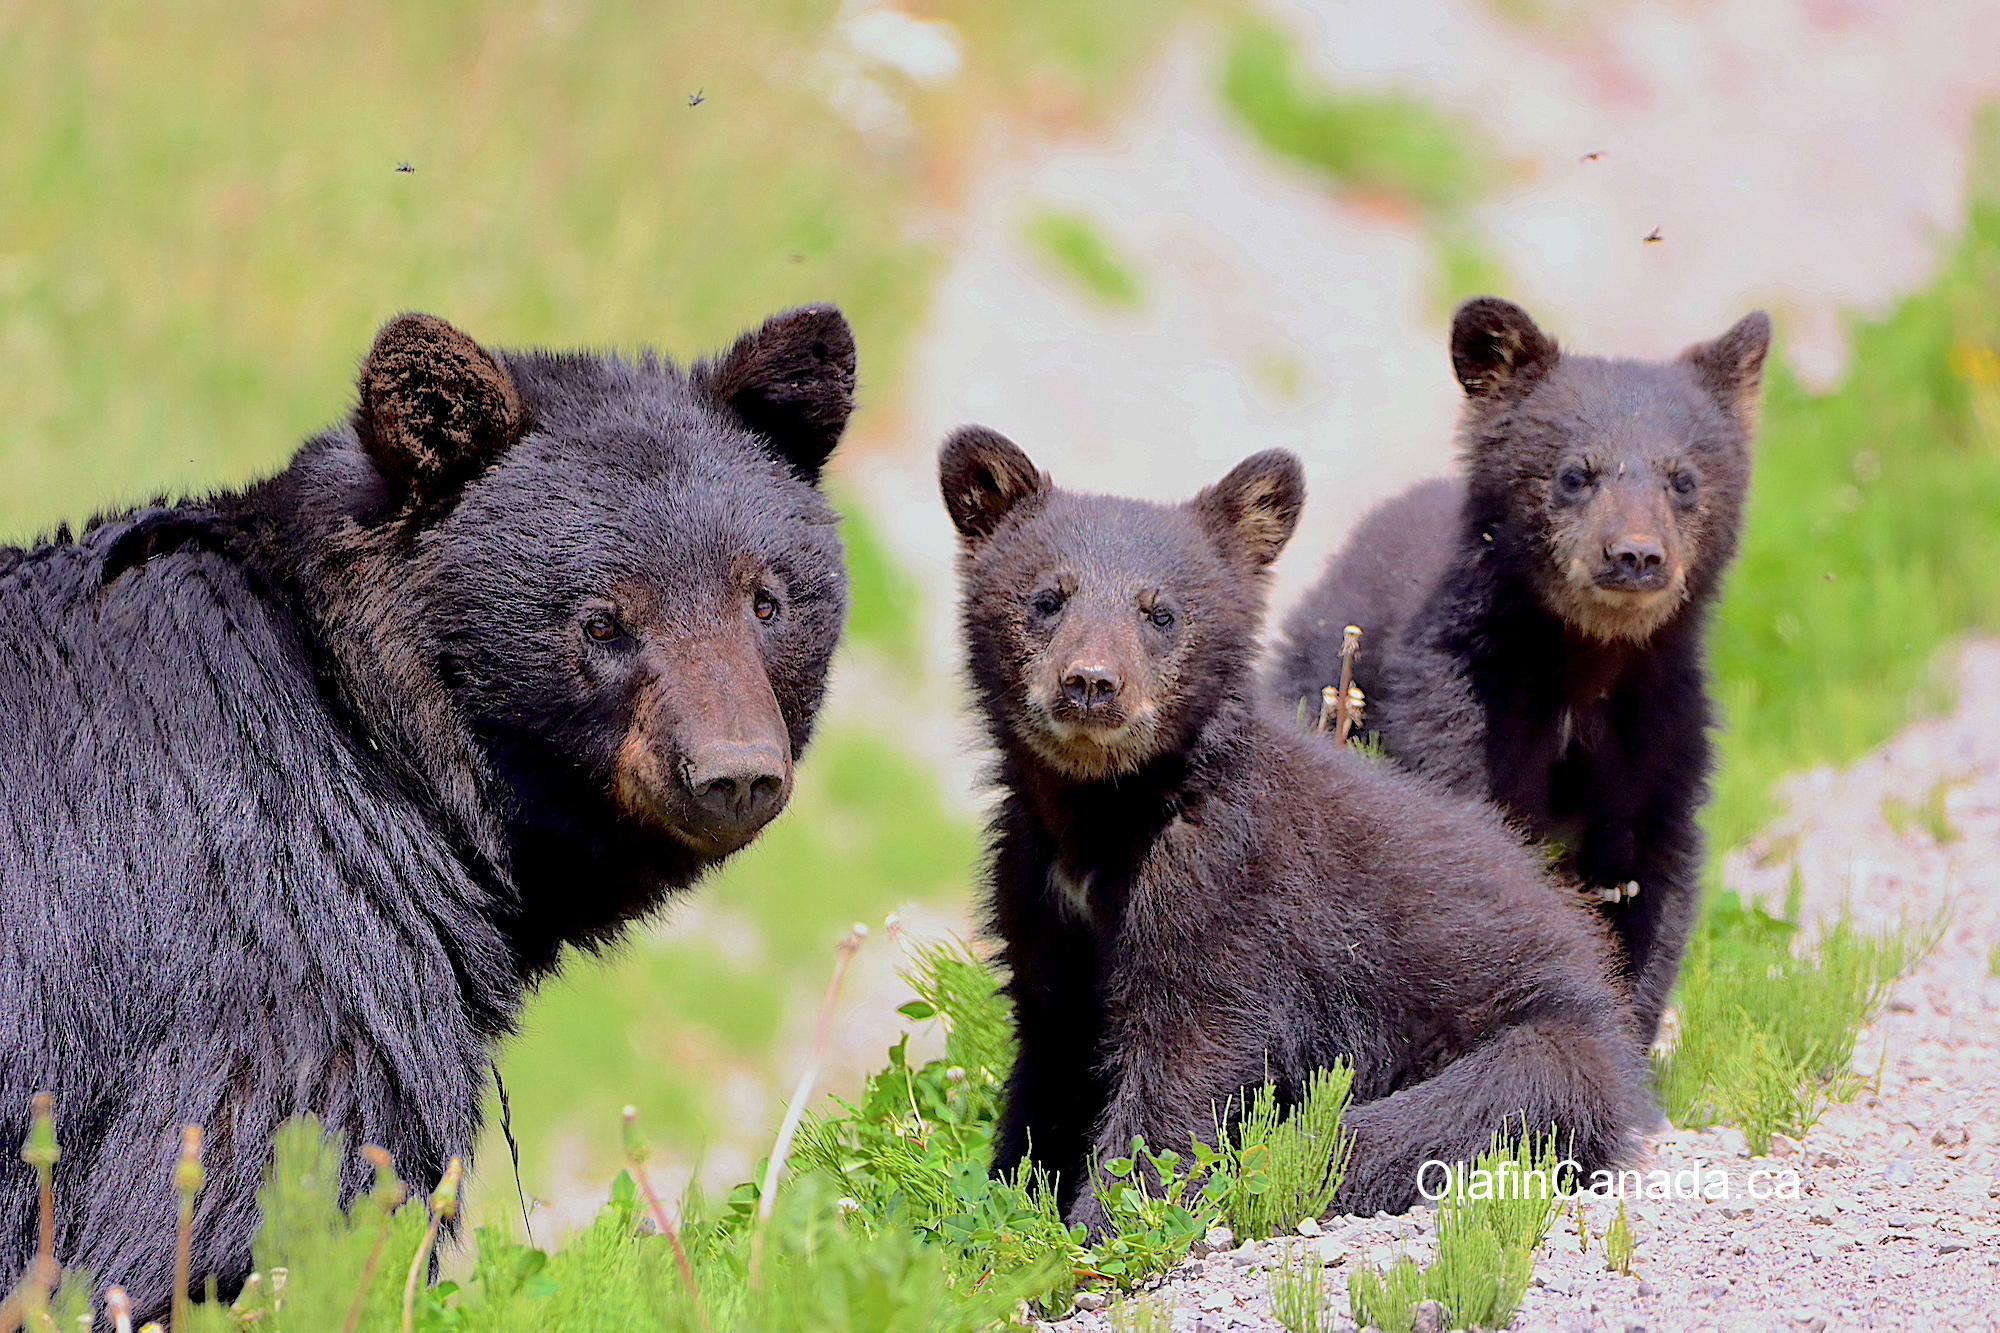 Black bear family near Bella Coola #olafincanada #britishcolumbia #discoverbc #bellacoola #wildlife #grizzlybear